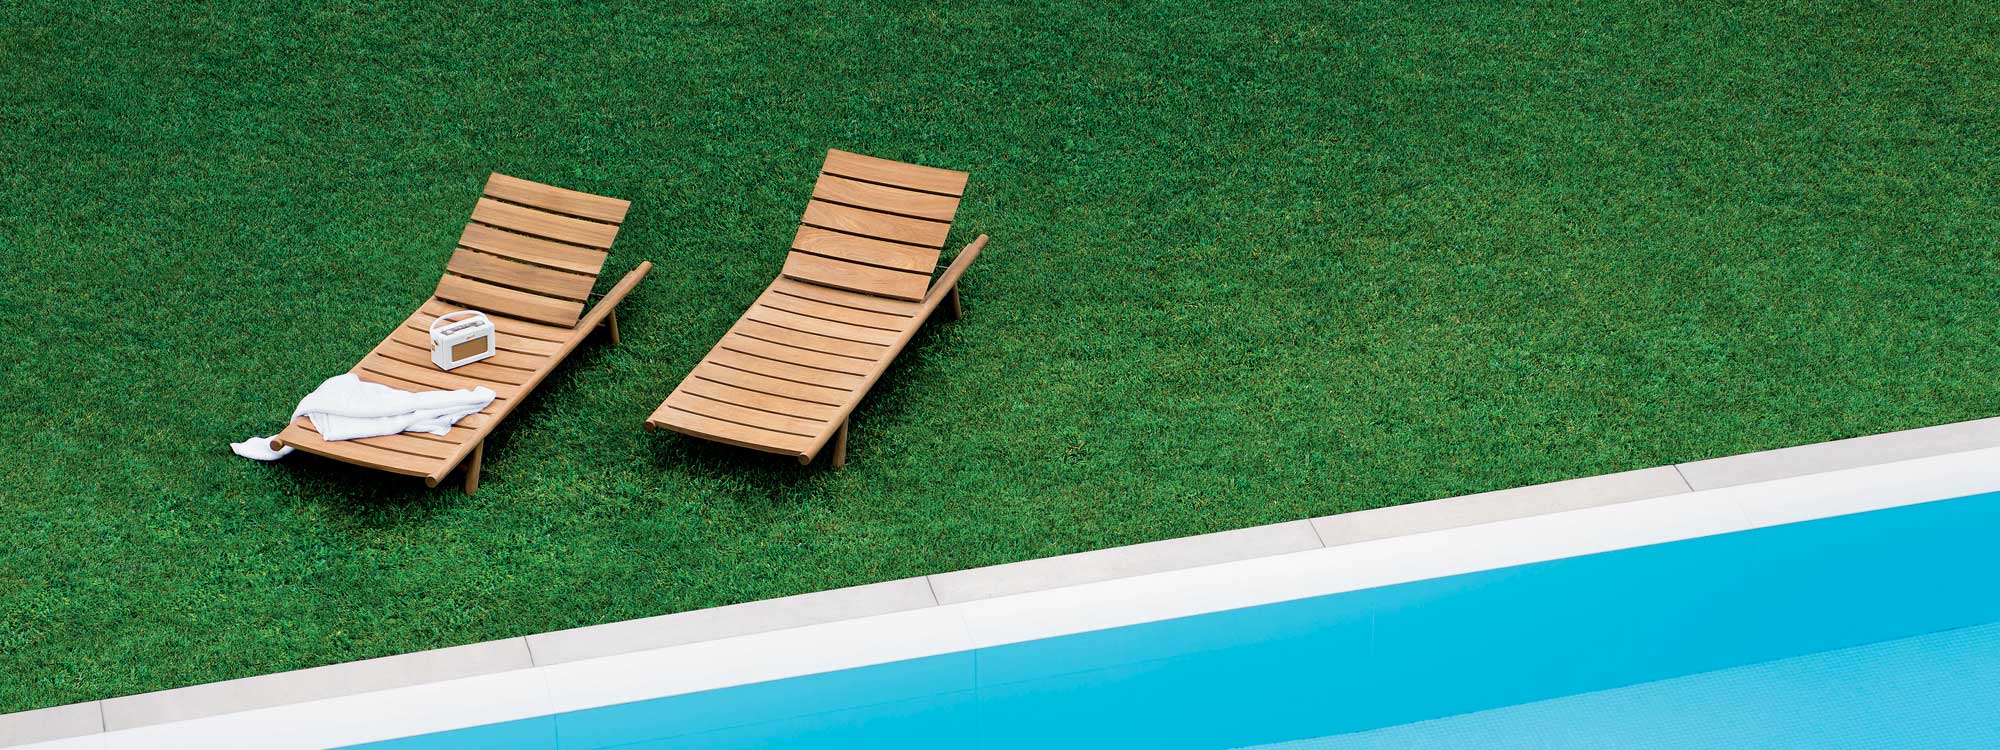 Orson modern teak sun lounger is a luxury garden recliner in finest quality outdoor furniture materials by Roda Italian garden furniture.